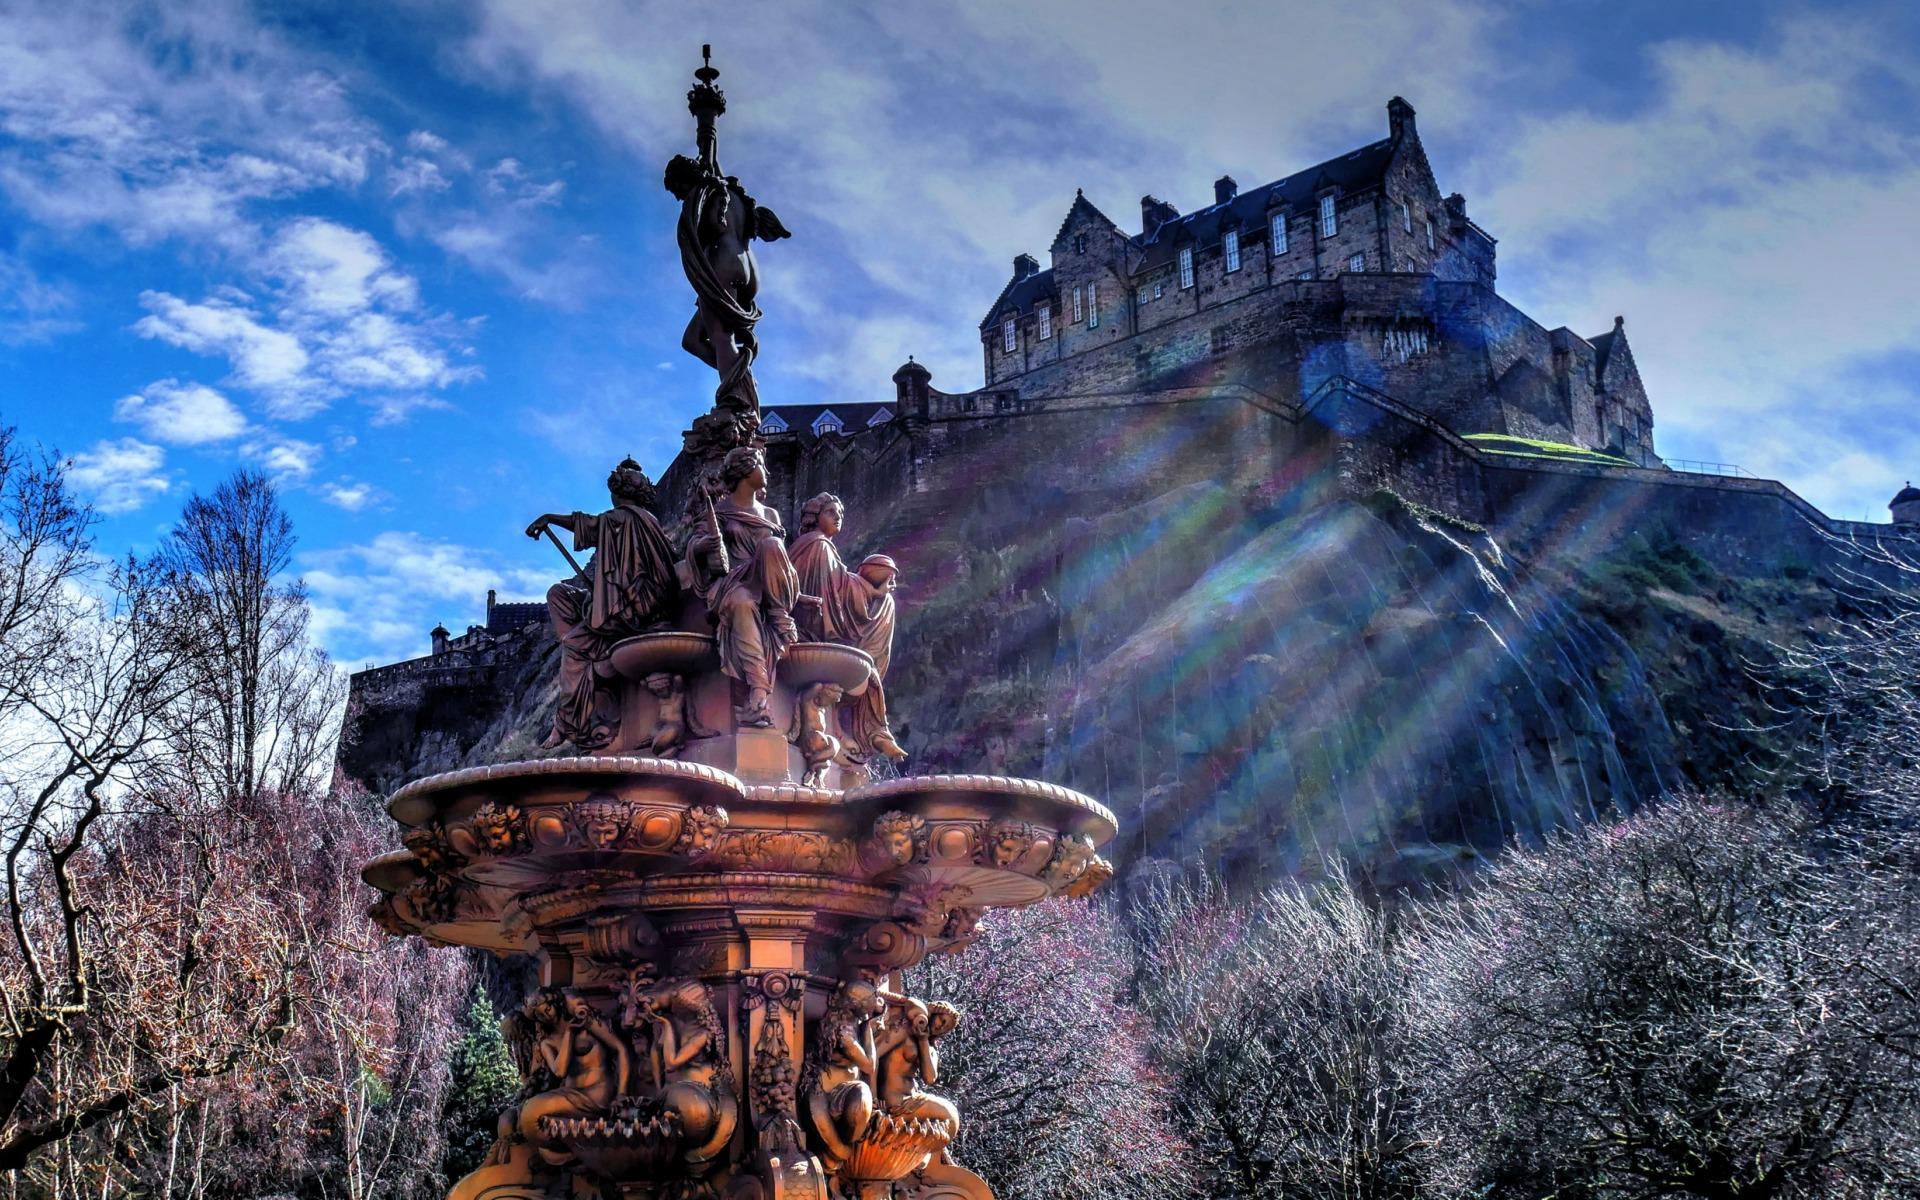 Download wallpaper Edinburgh Castle, old castle, old fountain